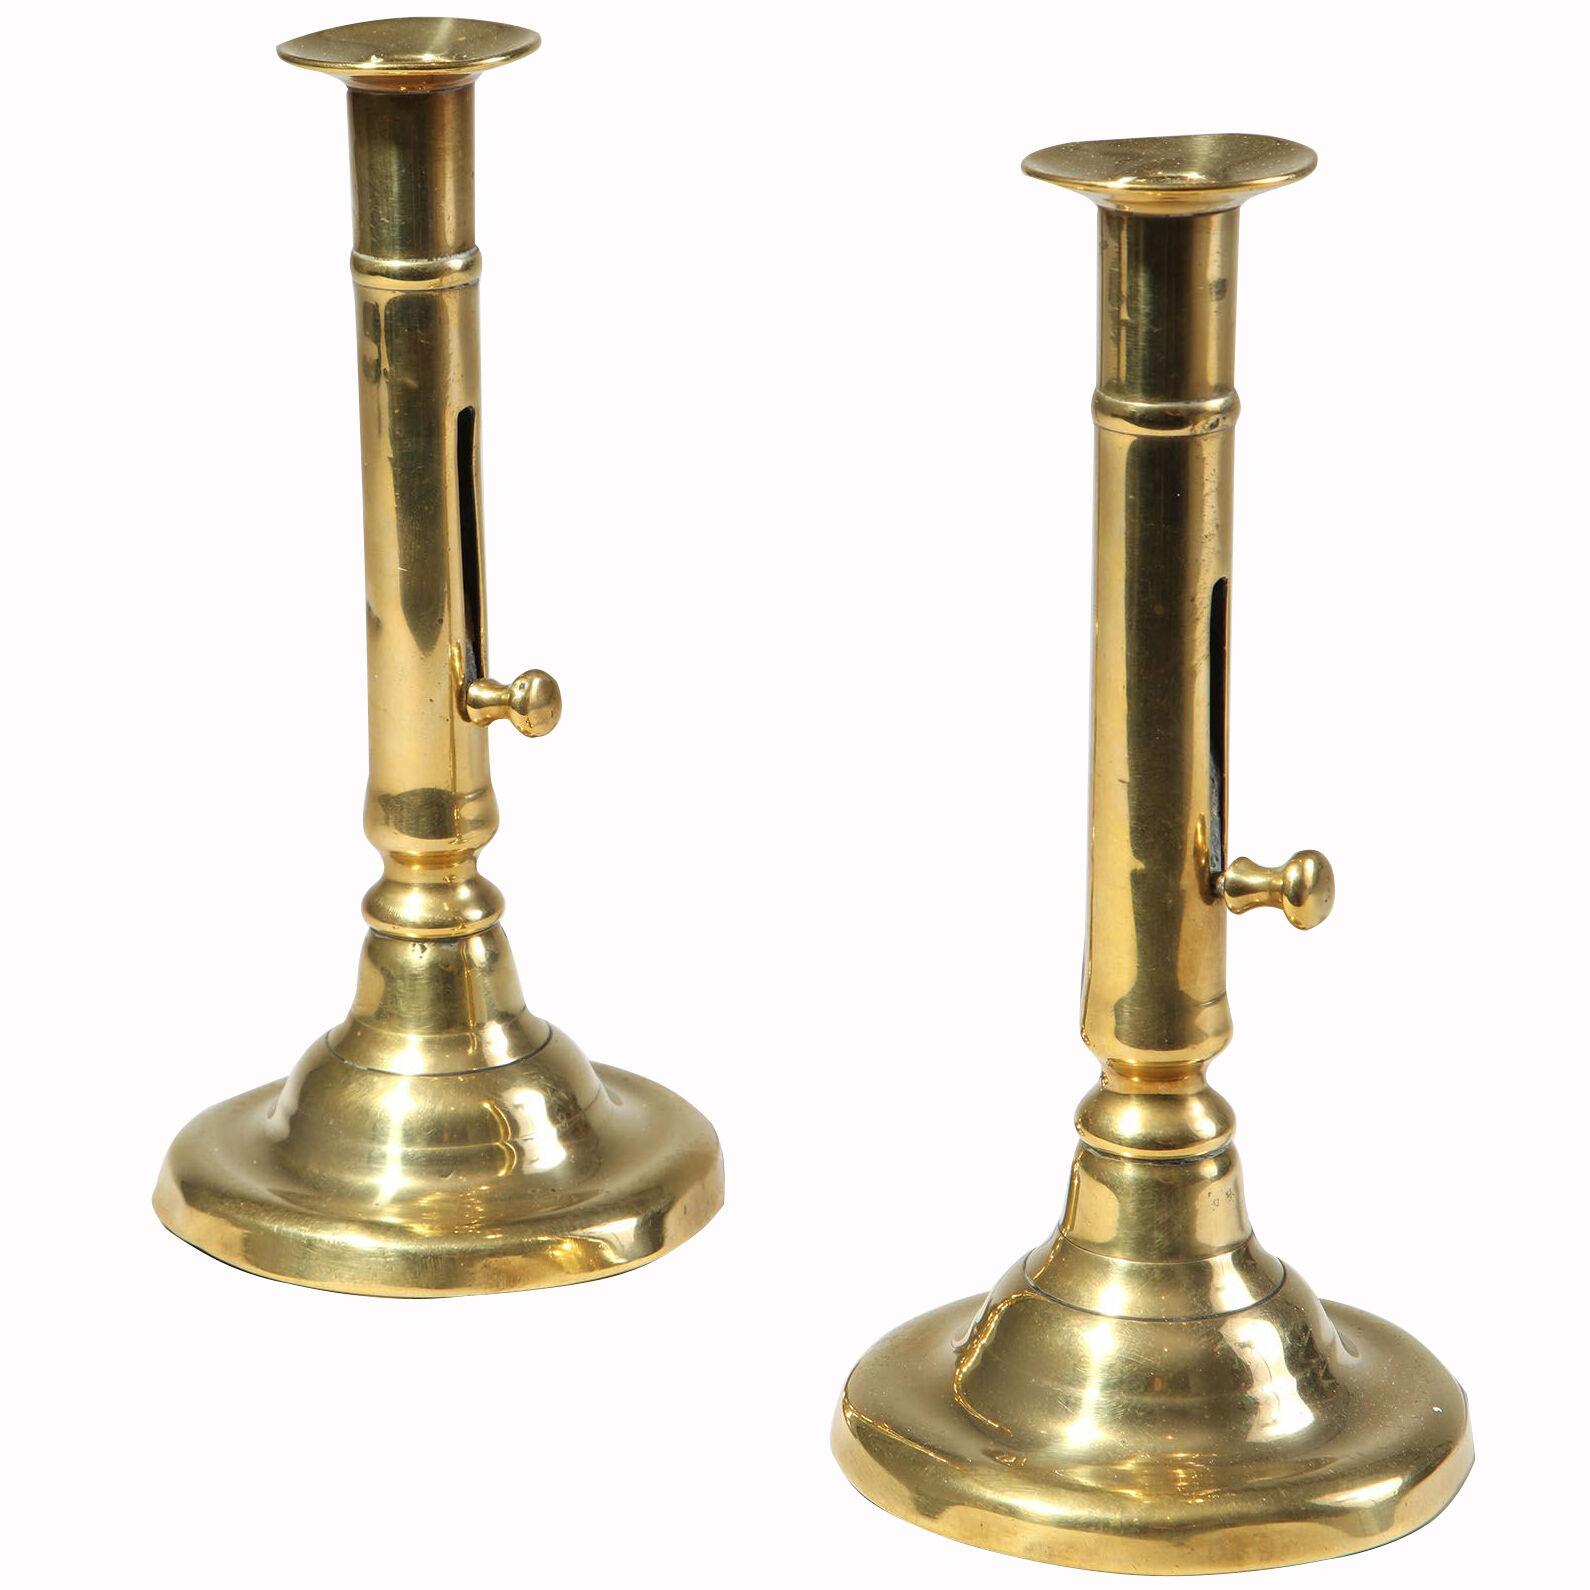 A pair of 18th century brass candlesticks